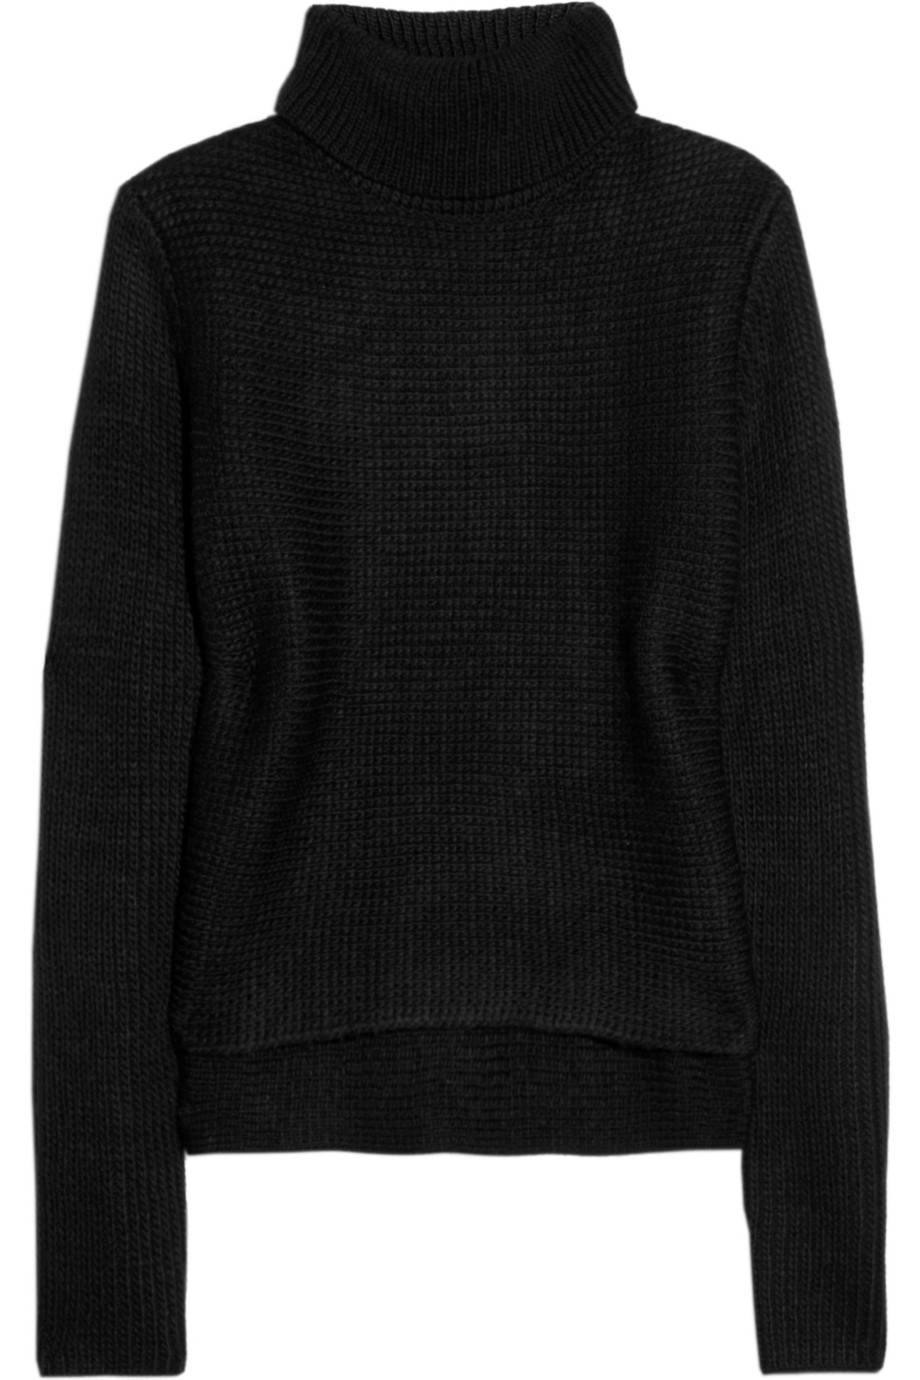 T by alexander wang Chunkyknit Turtleneck Sweater in Black | Lyst